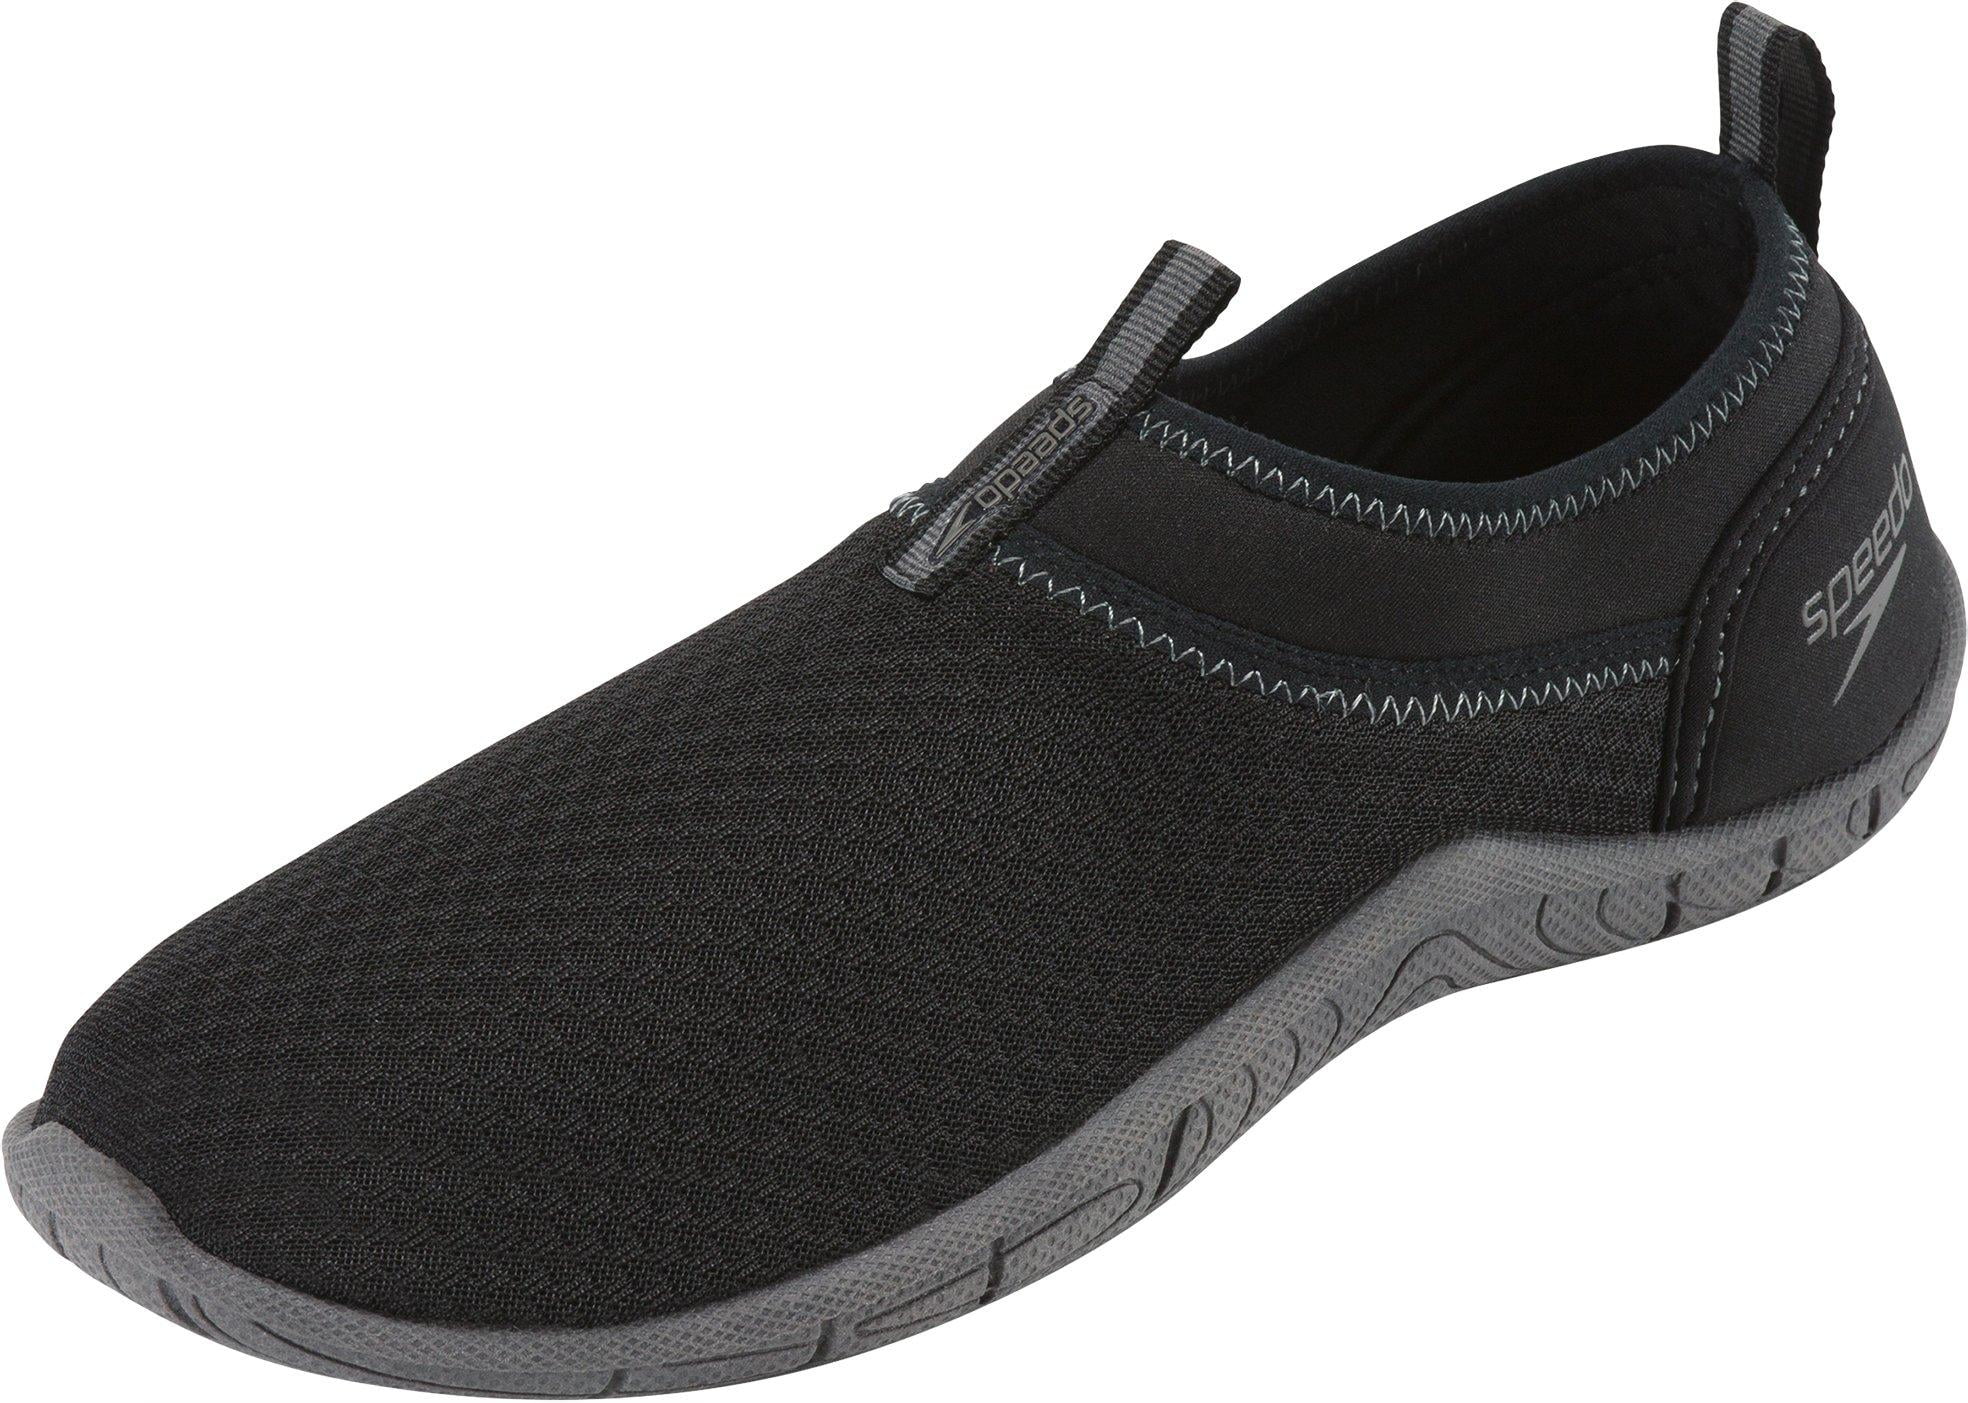 Speedo Tidal Cruiser Men's Water shoes Black/Gray 